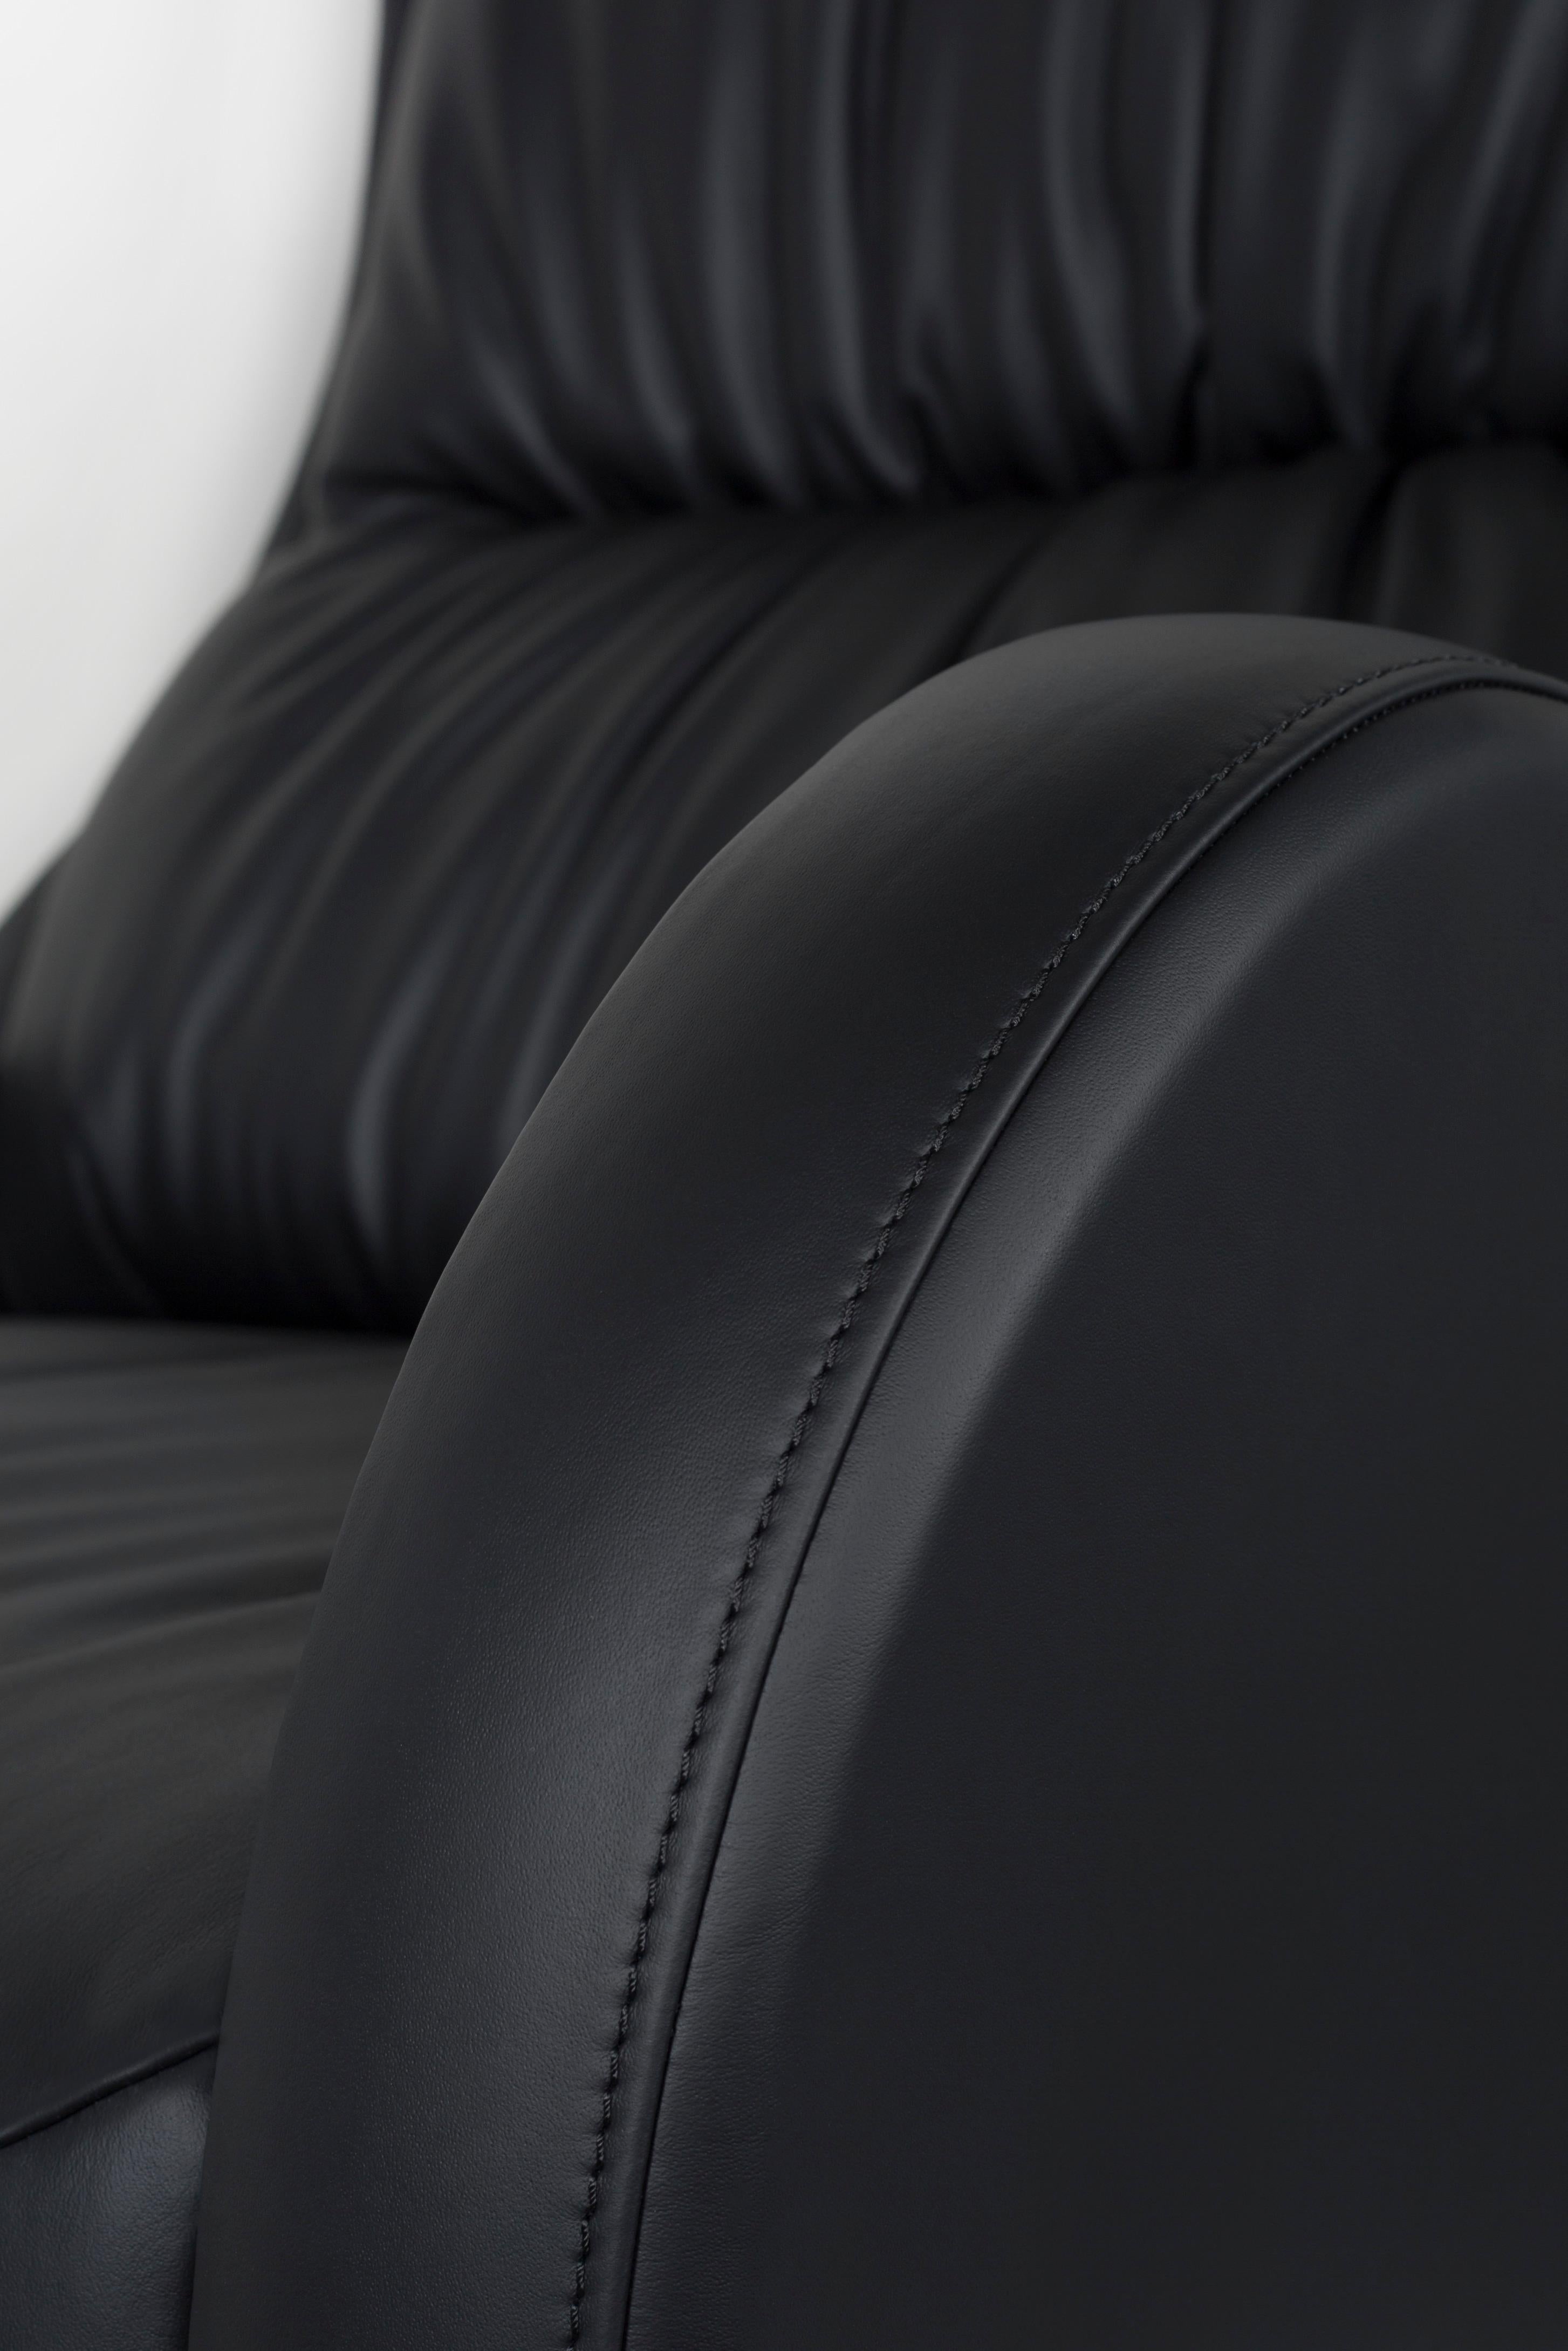 Modern Capelinhos Lounge Chair, Swivel, Black, Handmade Portugal by Greenapple For Sale 1